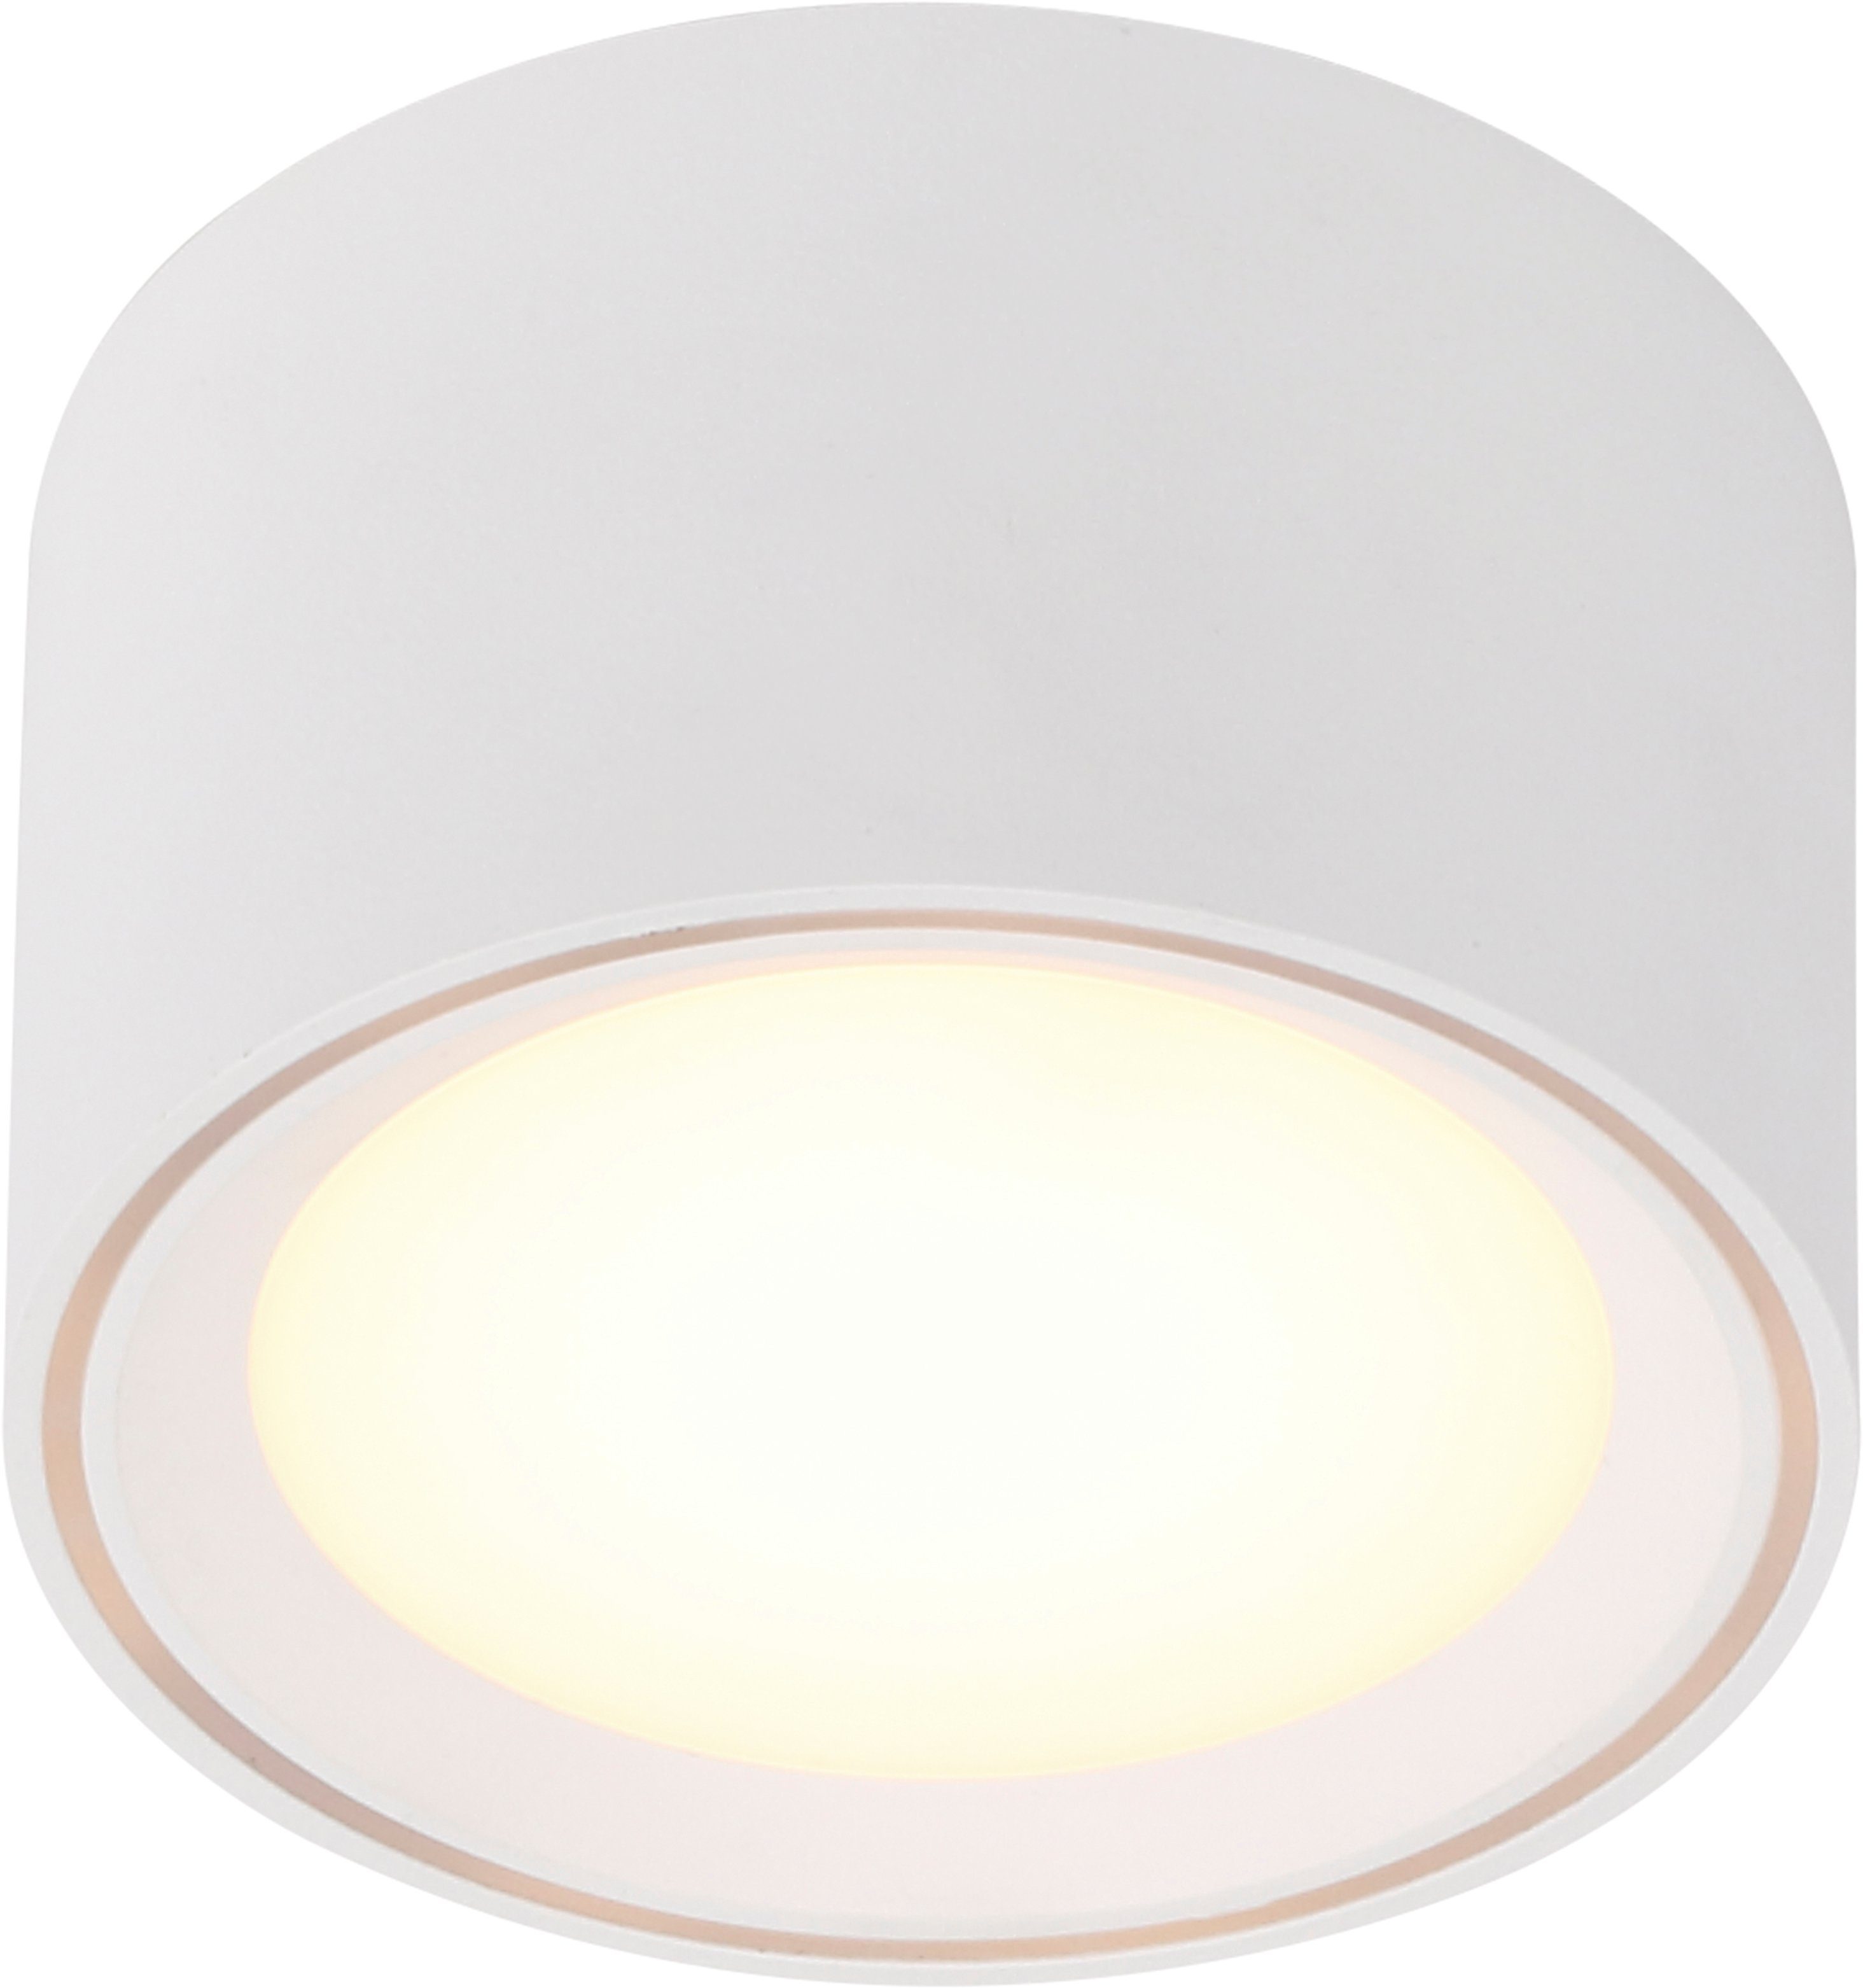 Nordlux LED Deckenspot Fallon, Dimmfunktion, LED fest integriert, Warmweiß, LED Deckenleuchte | Deckenstrahler